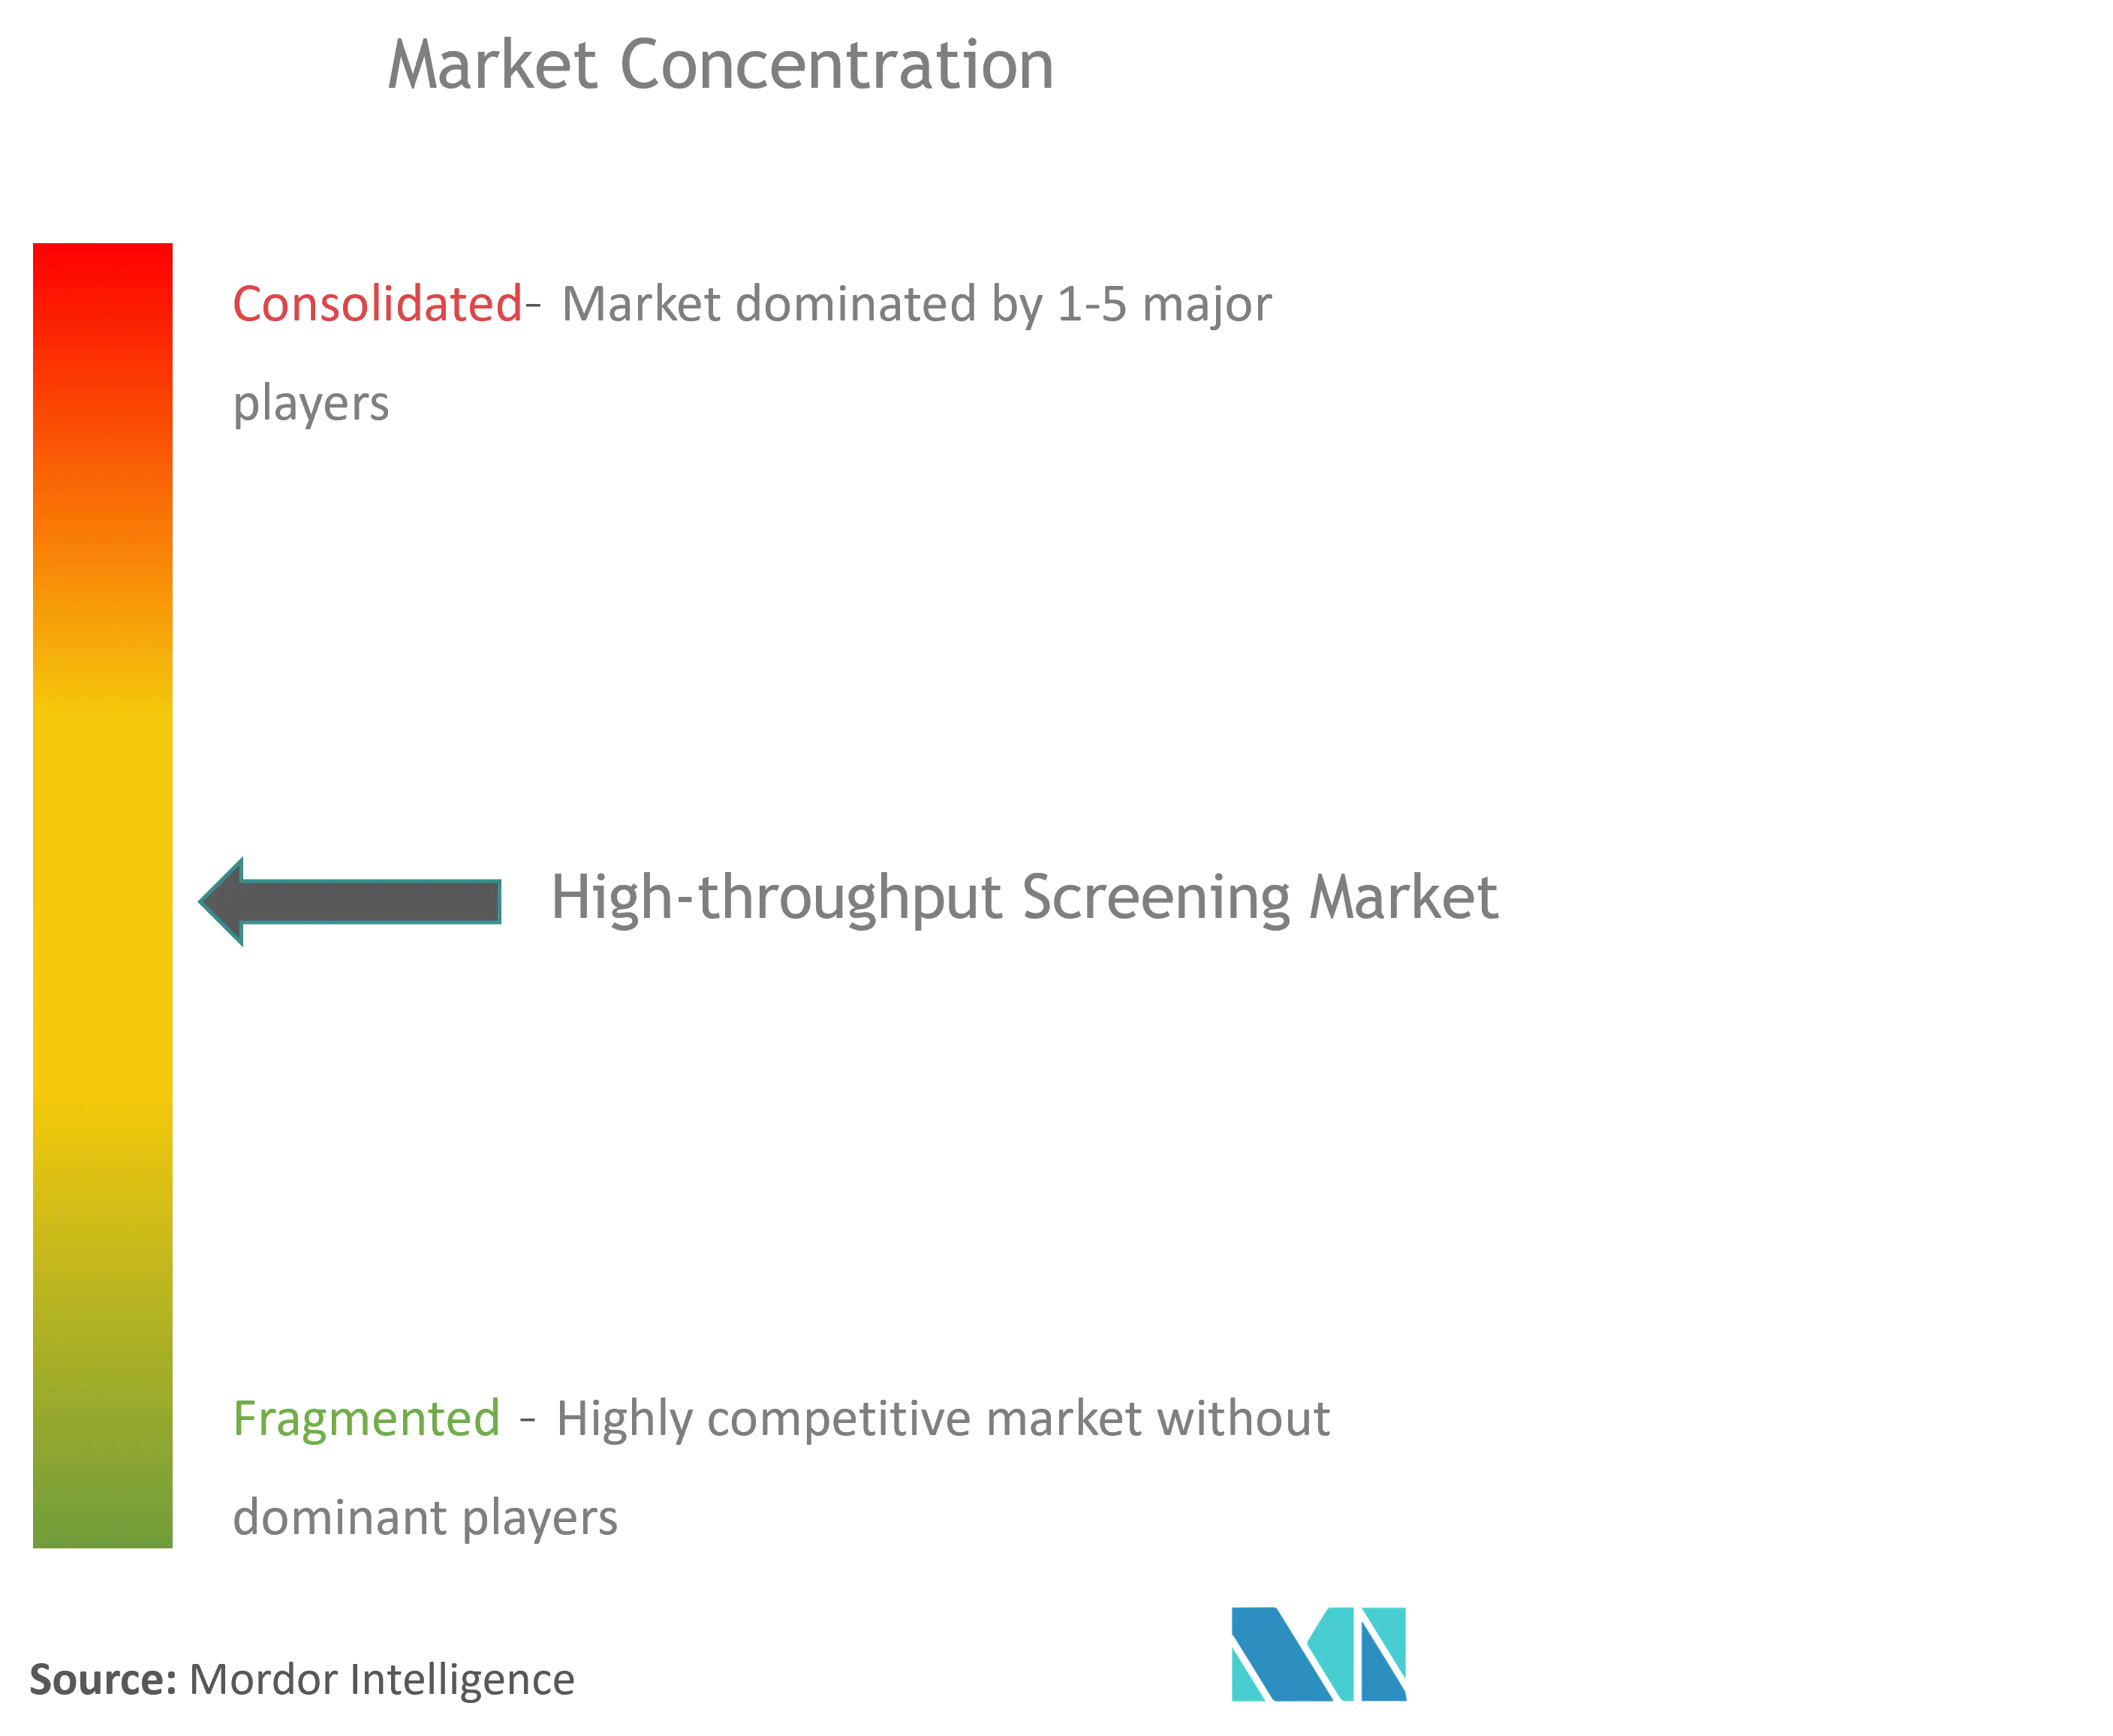 Global High-throughput Screening Market Concentration